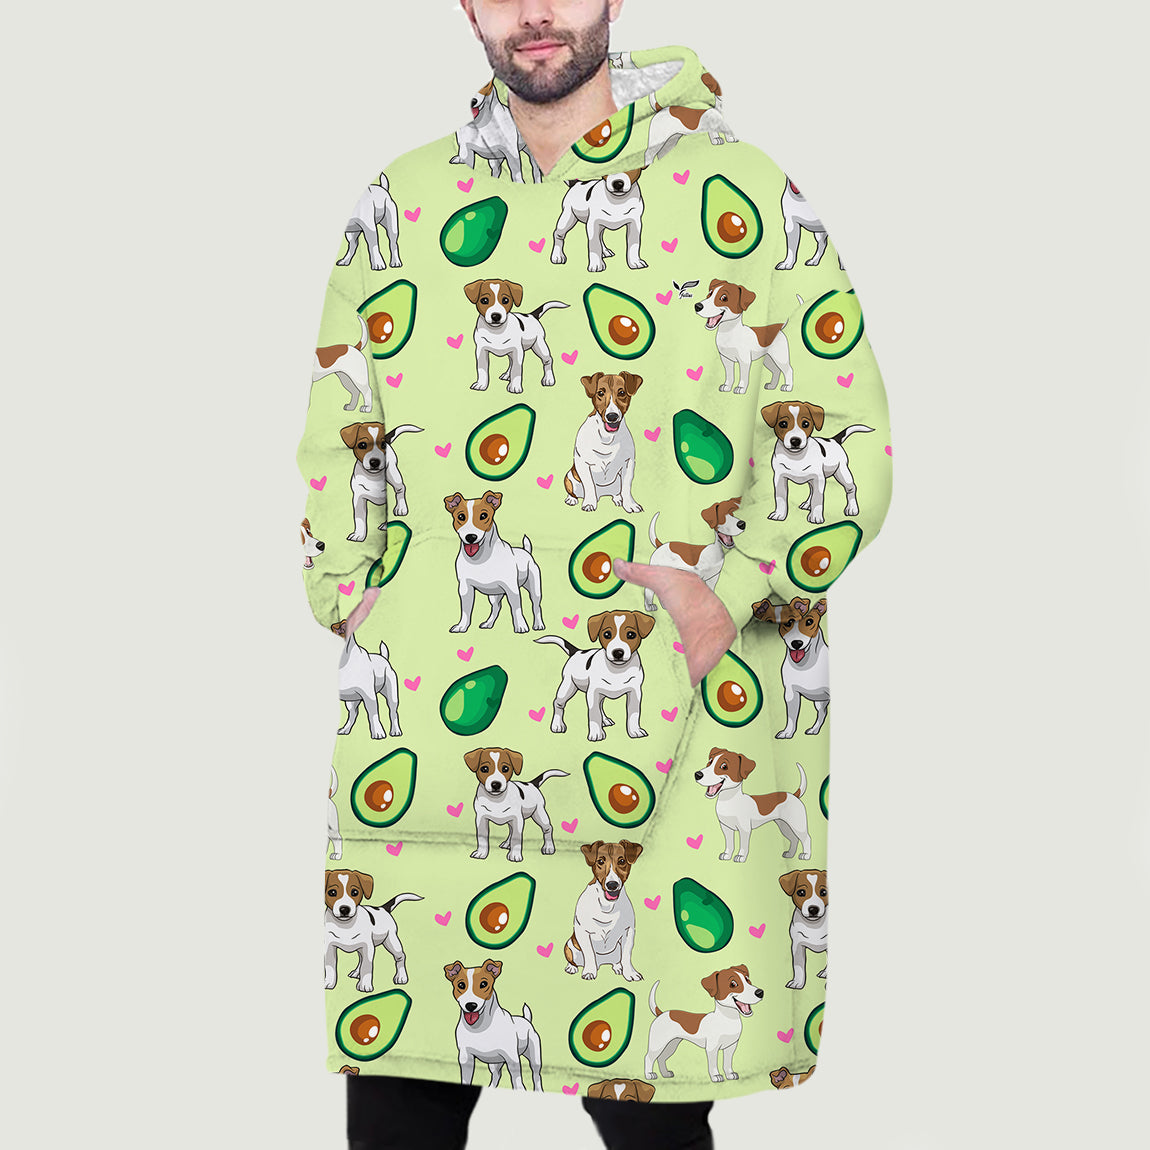 Ich liebe Avocados – Jack Russell Terrier Fleecedecke Hoodie